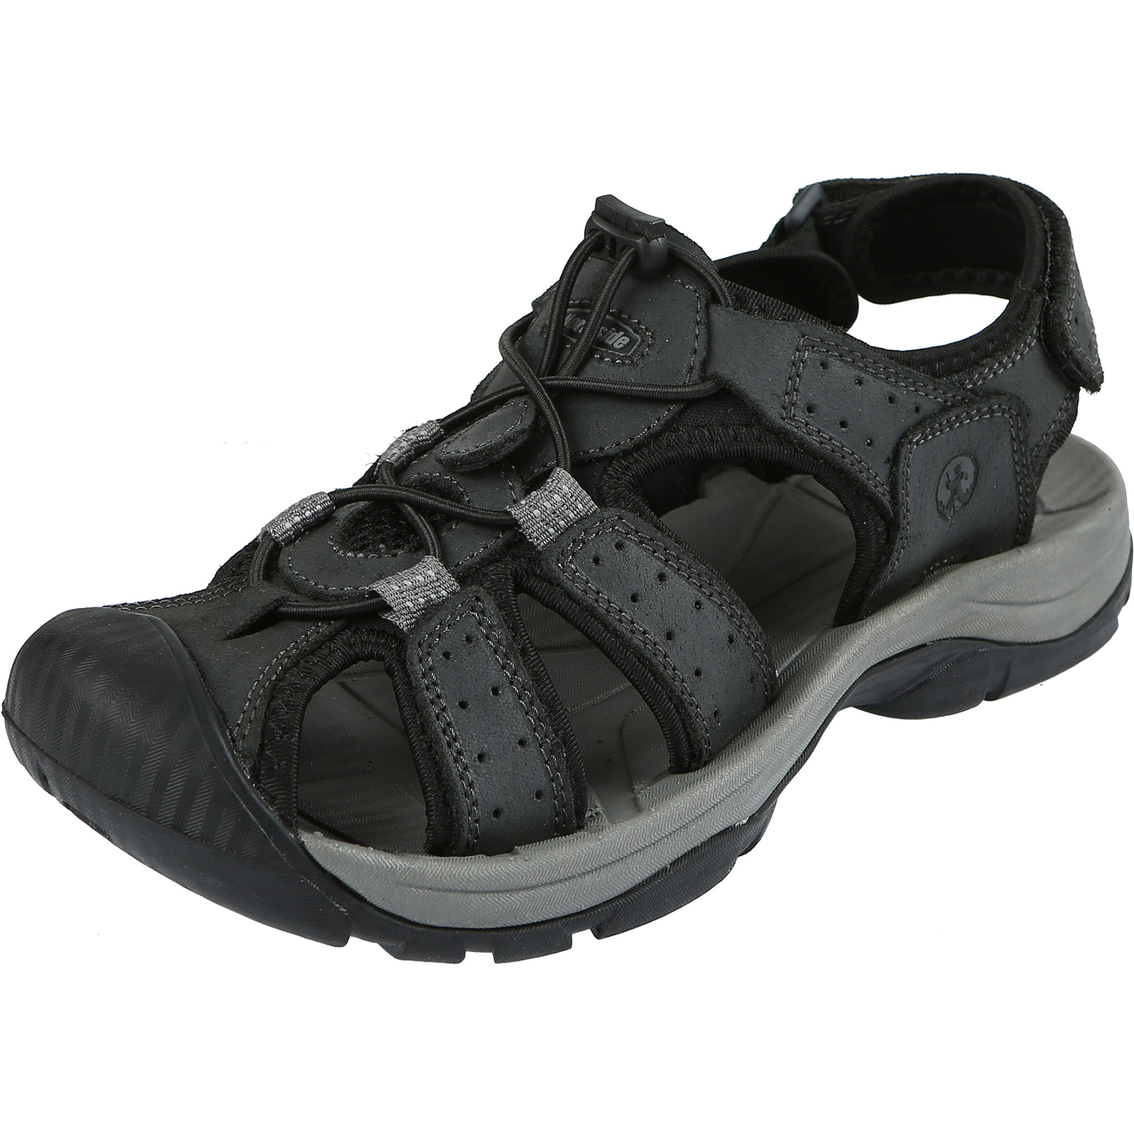 Northside Men's Trinidad Leather Sport Closed Toe Sandals | Sandals ...